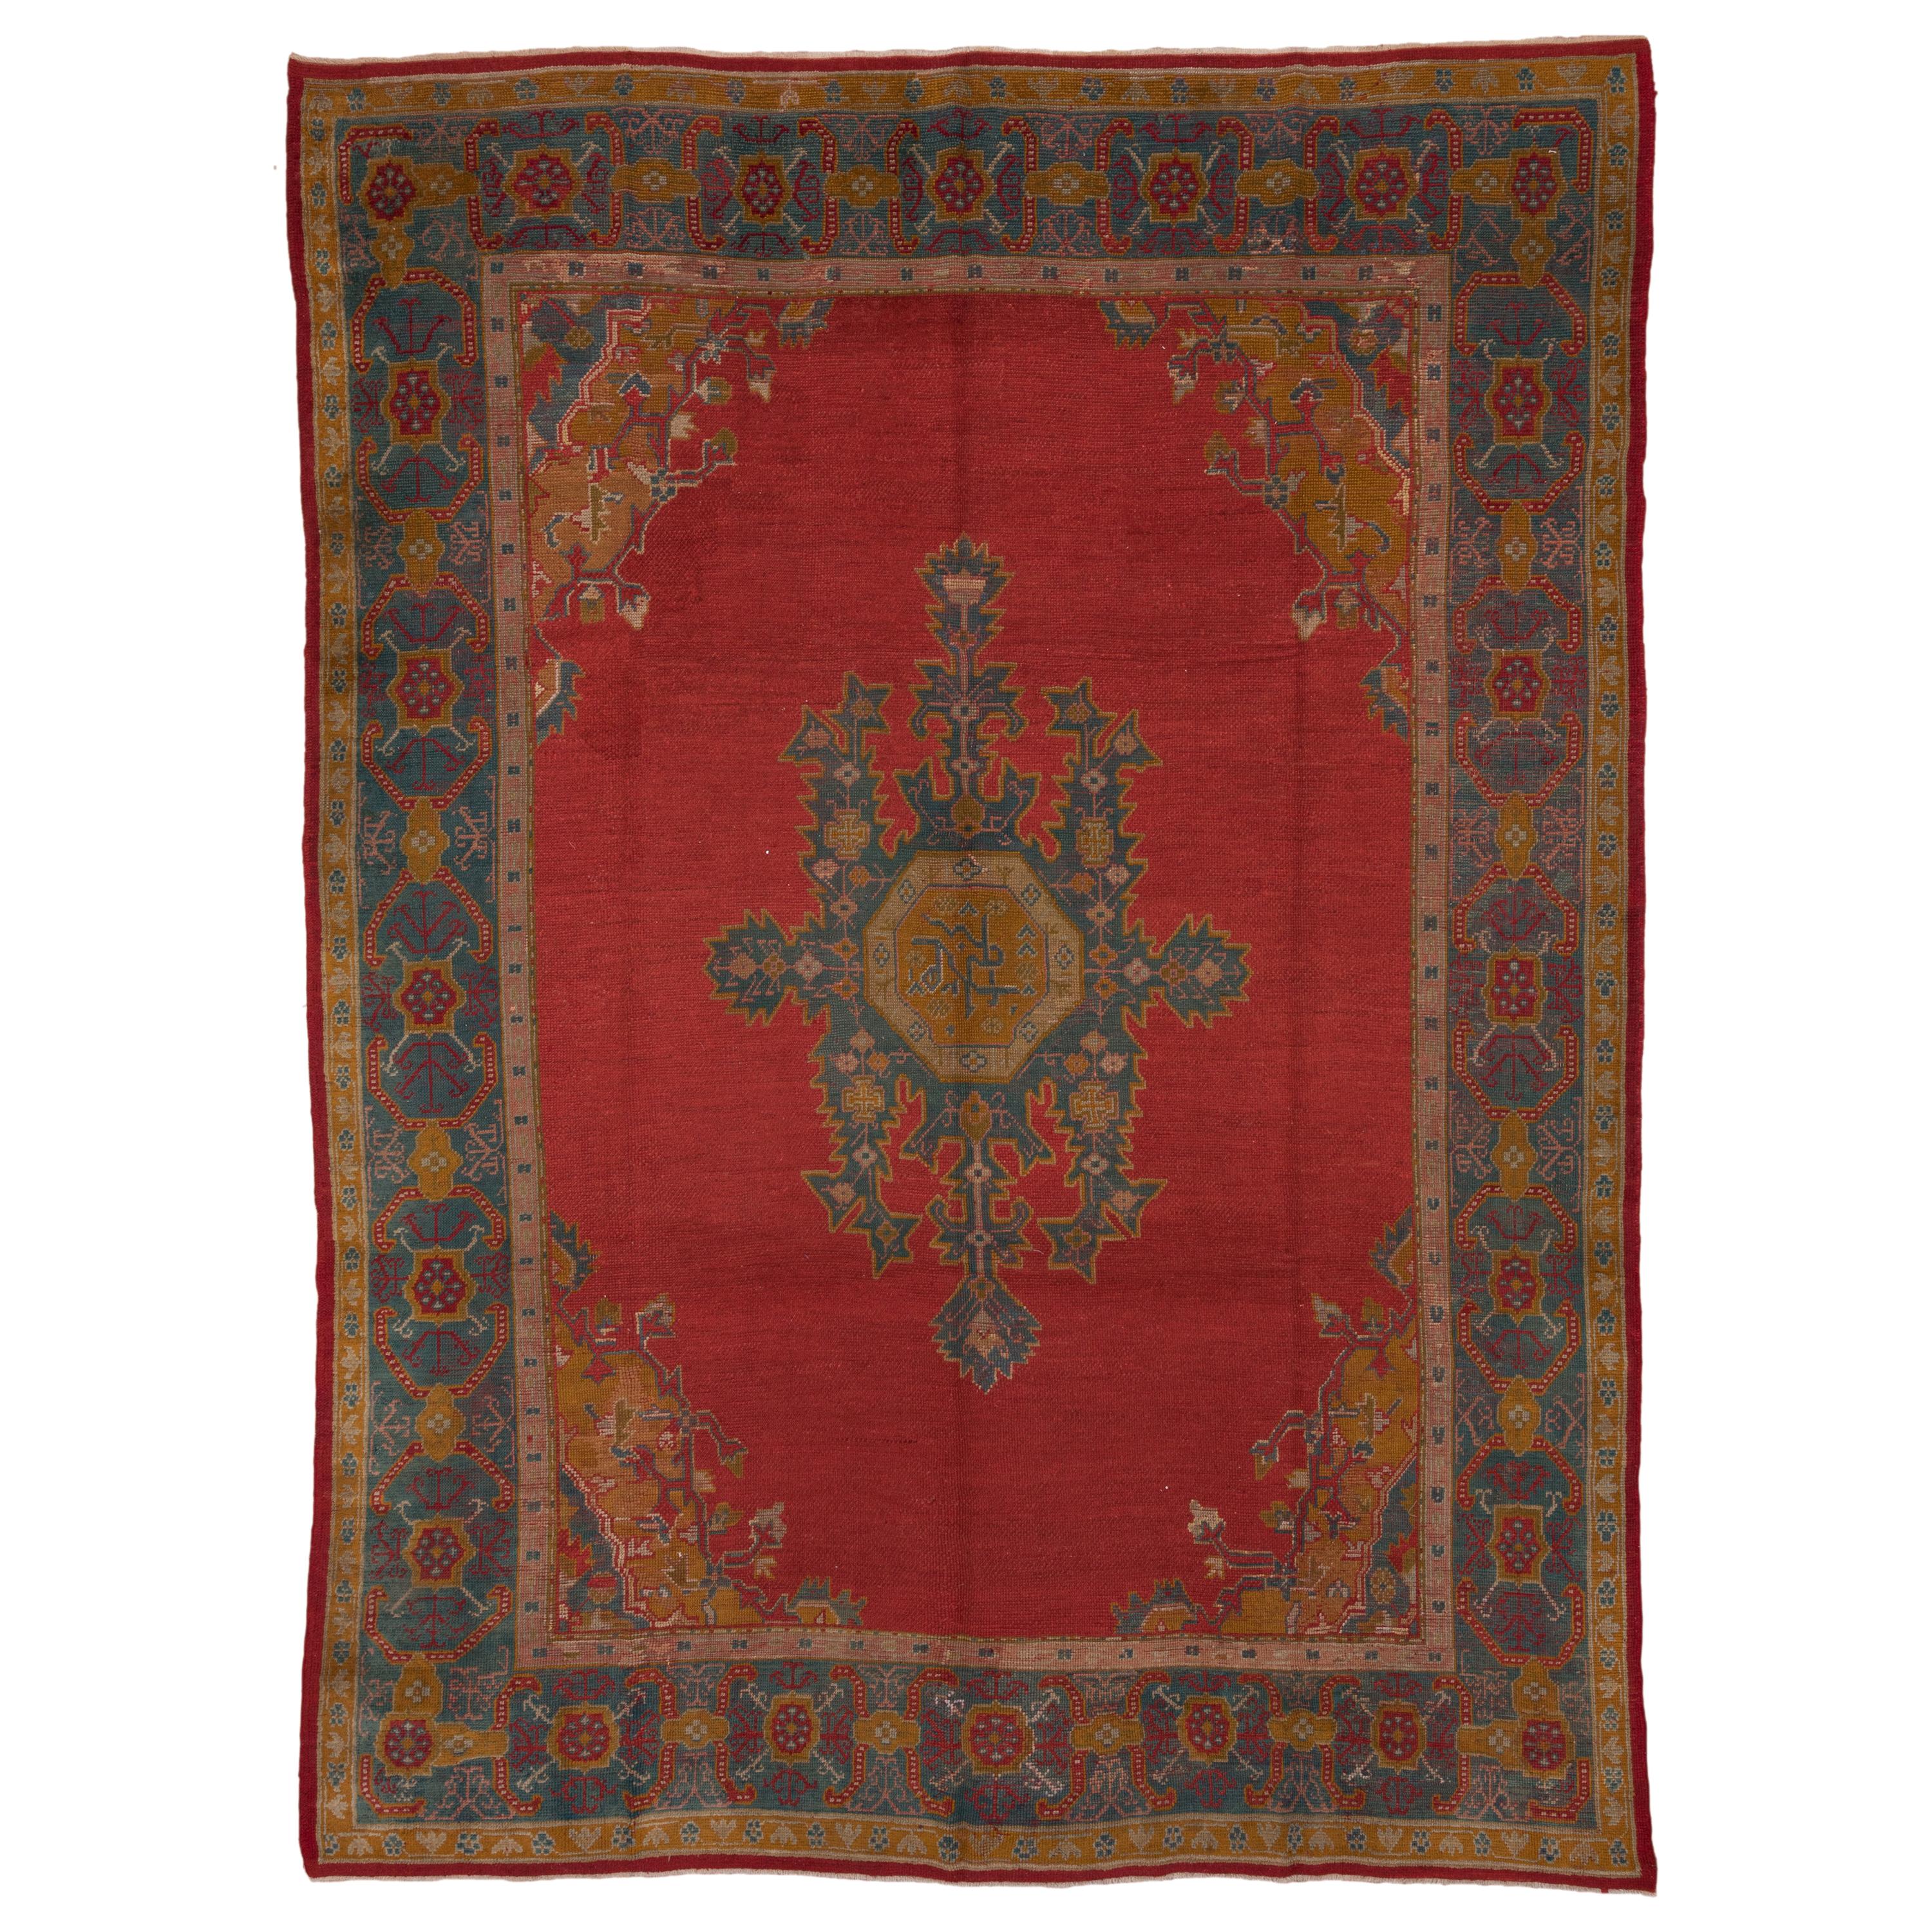 Antique Red Turkish Oushak Carpet For Sale